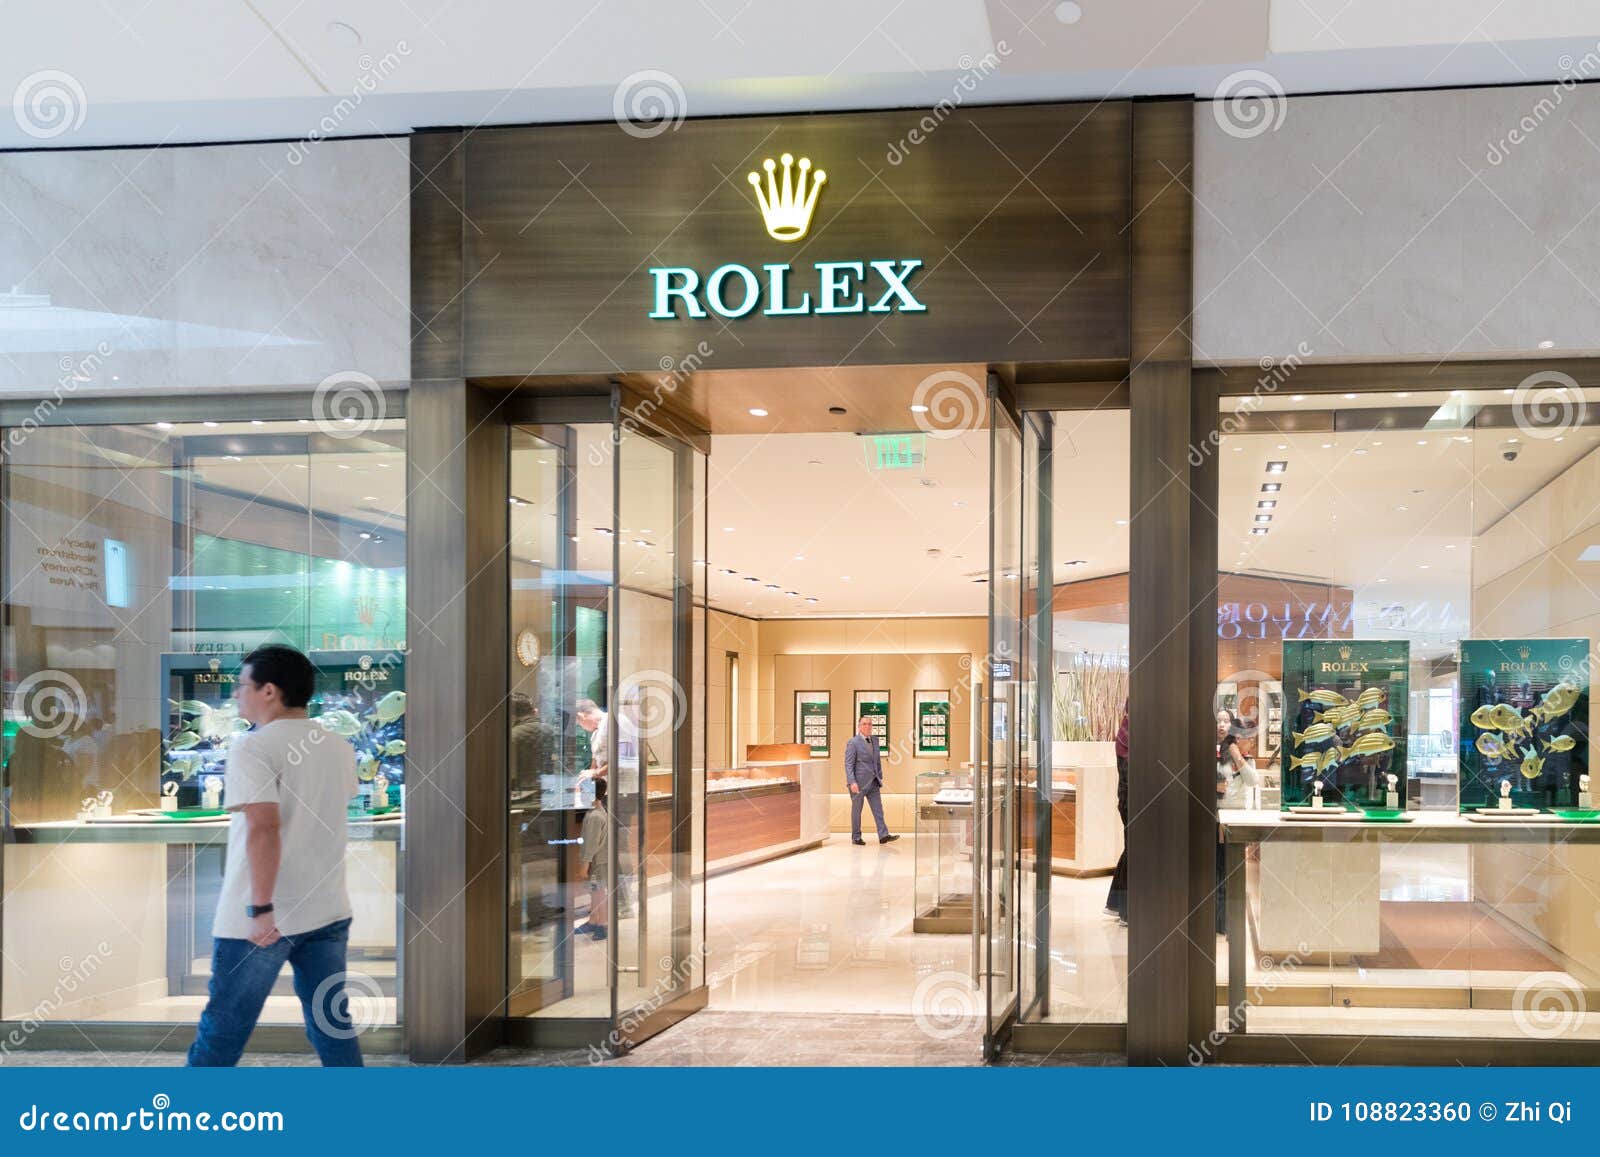 rolex store locations